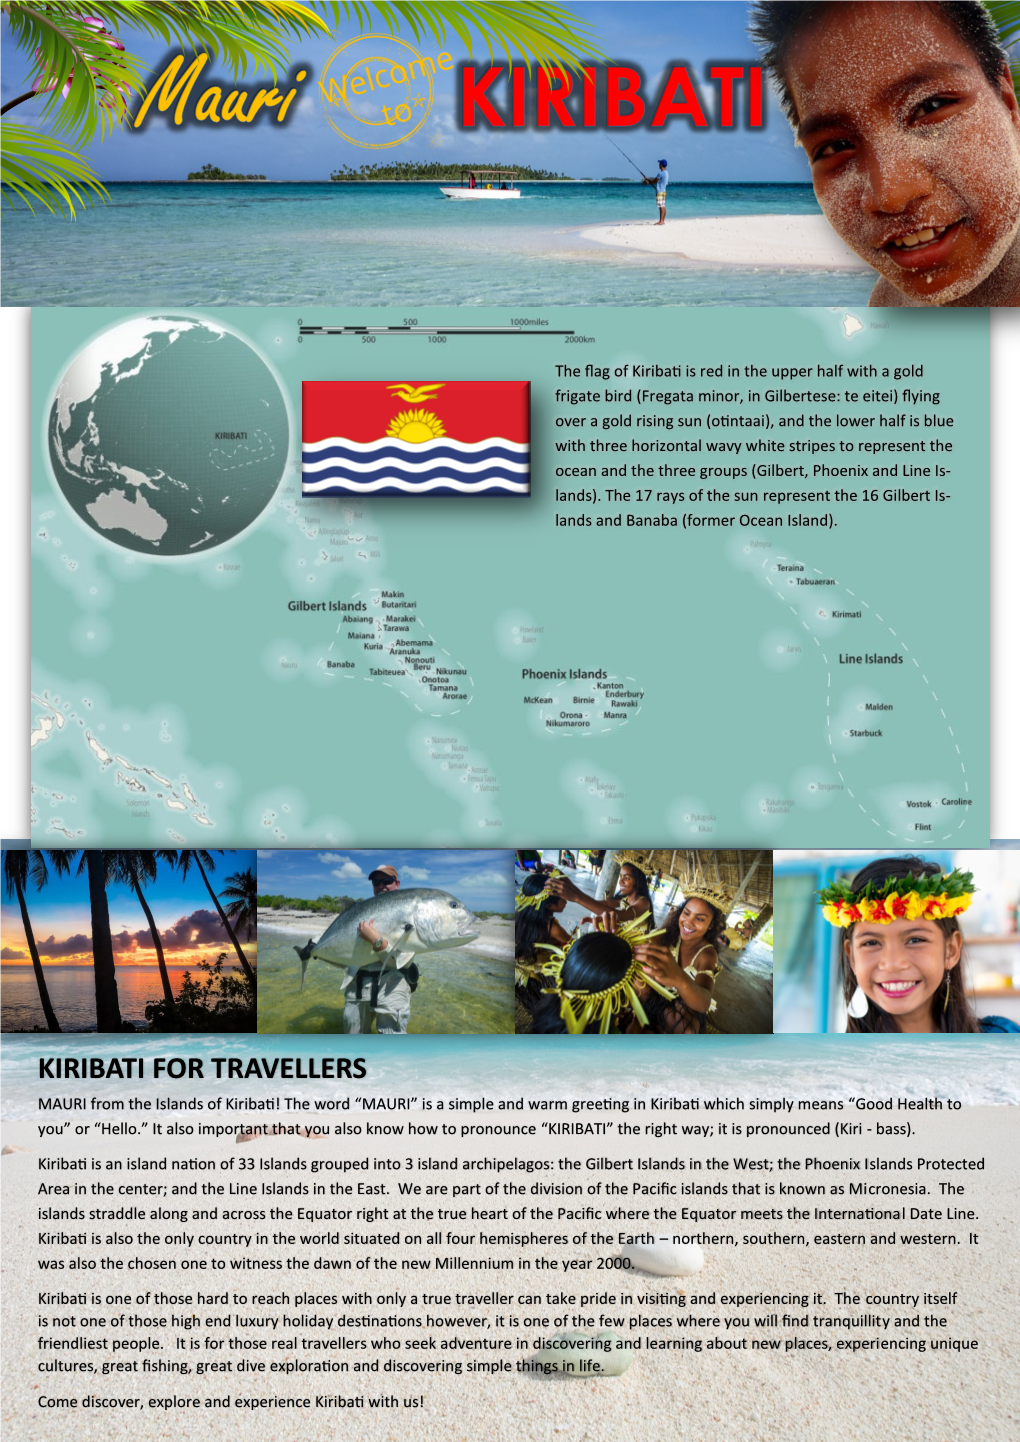 What Makes Kiribati a Unique Travel Destination